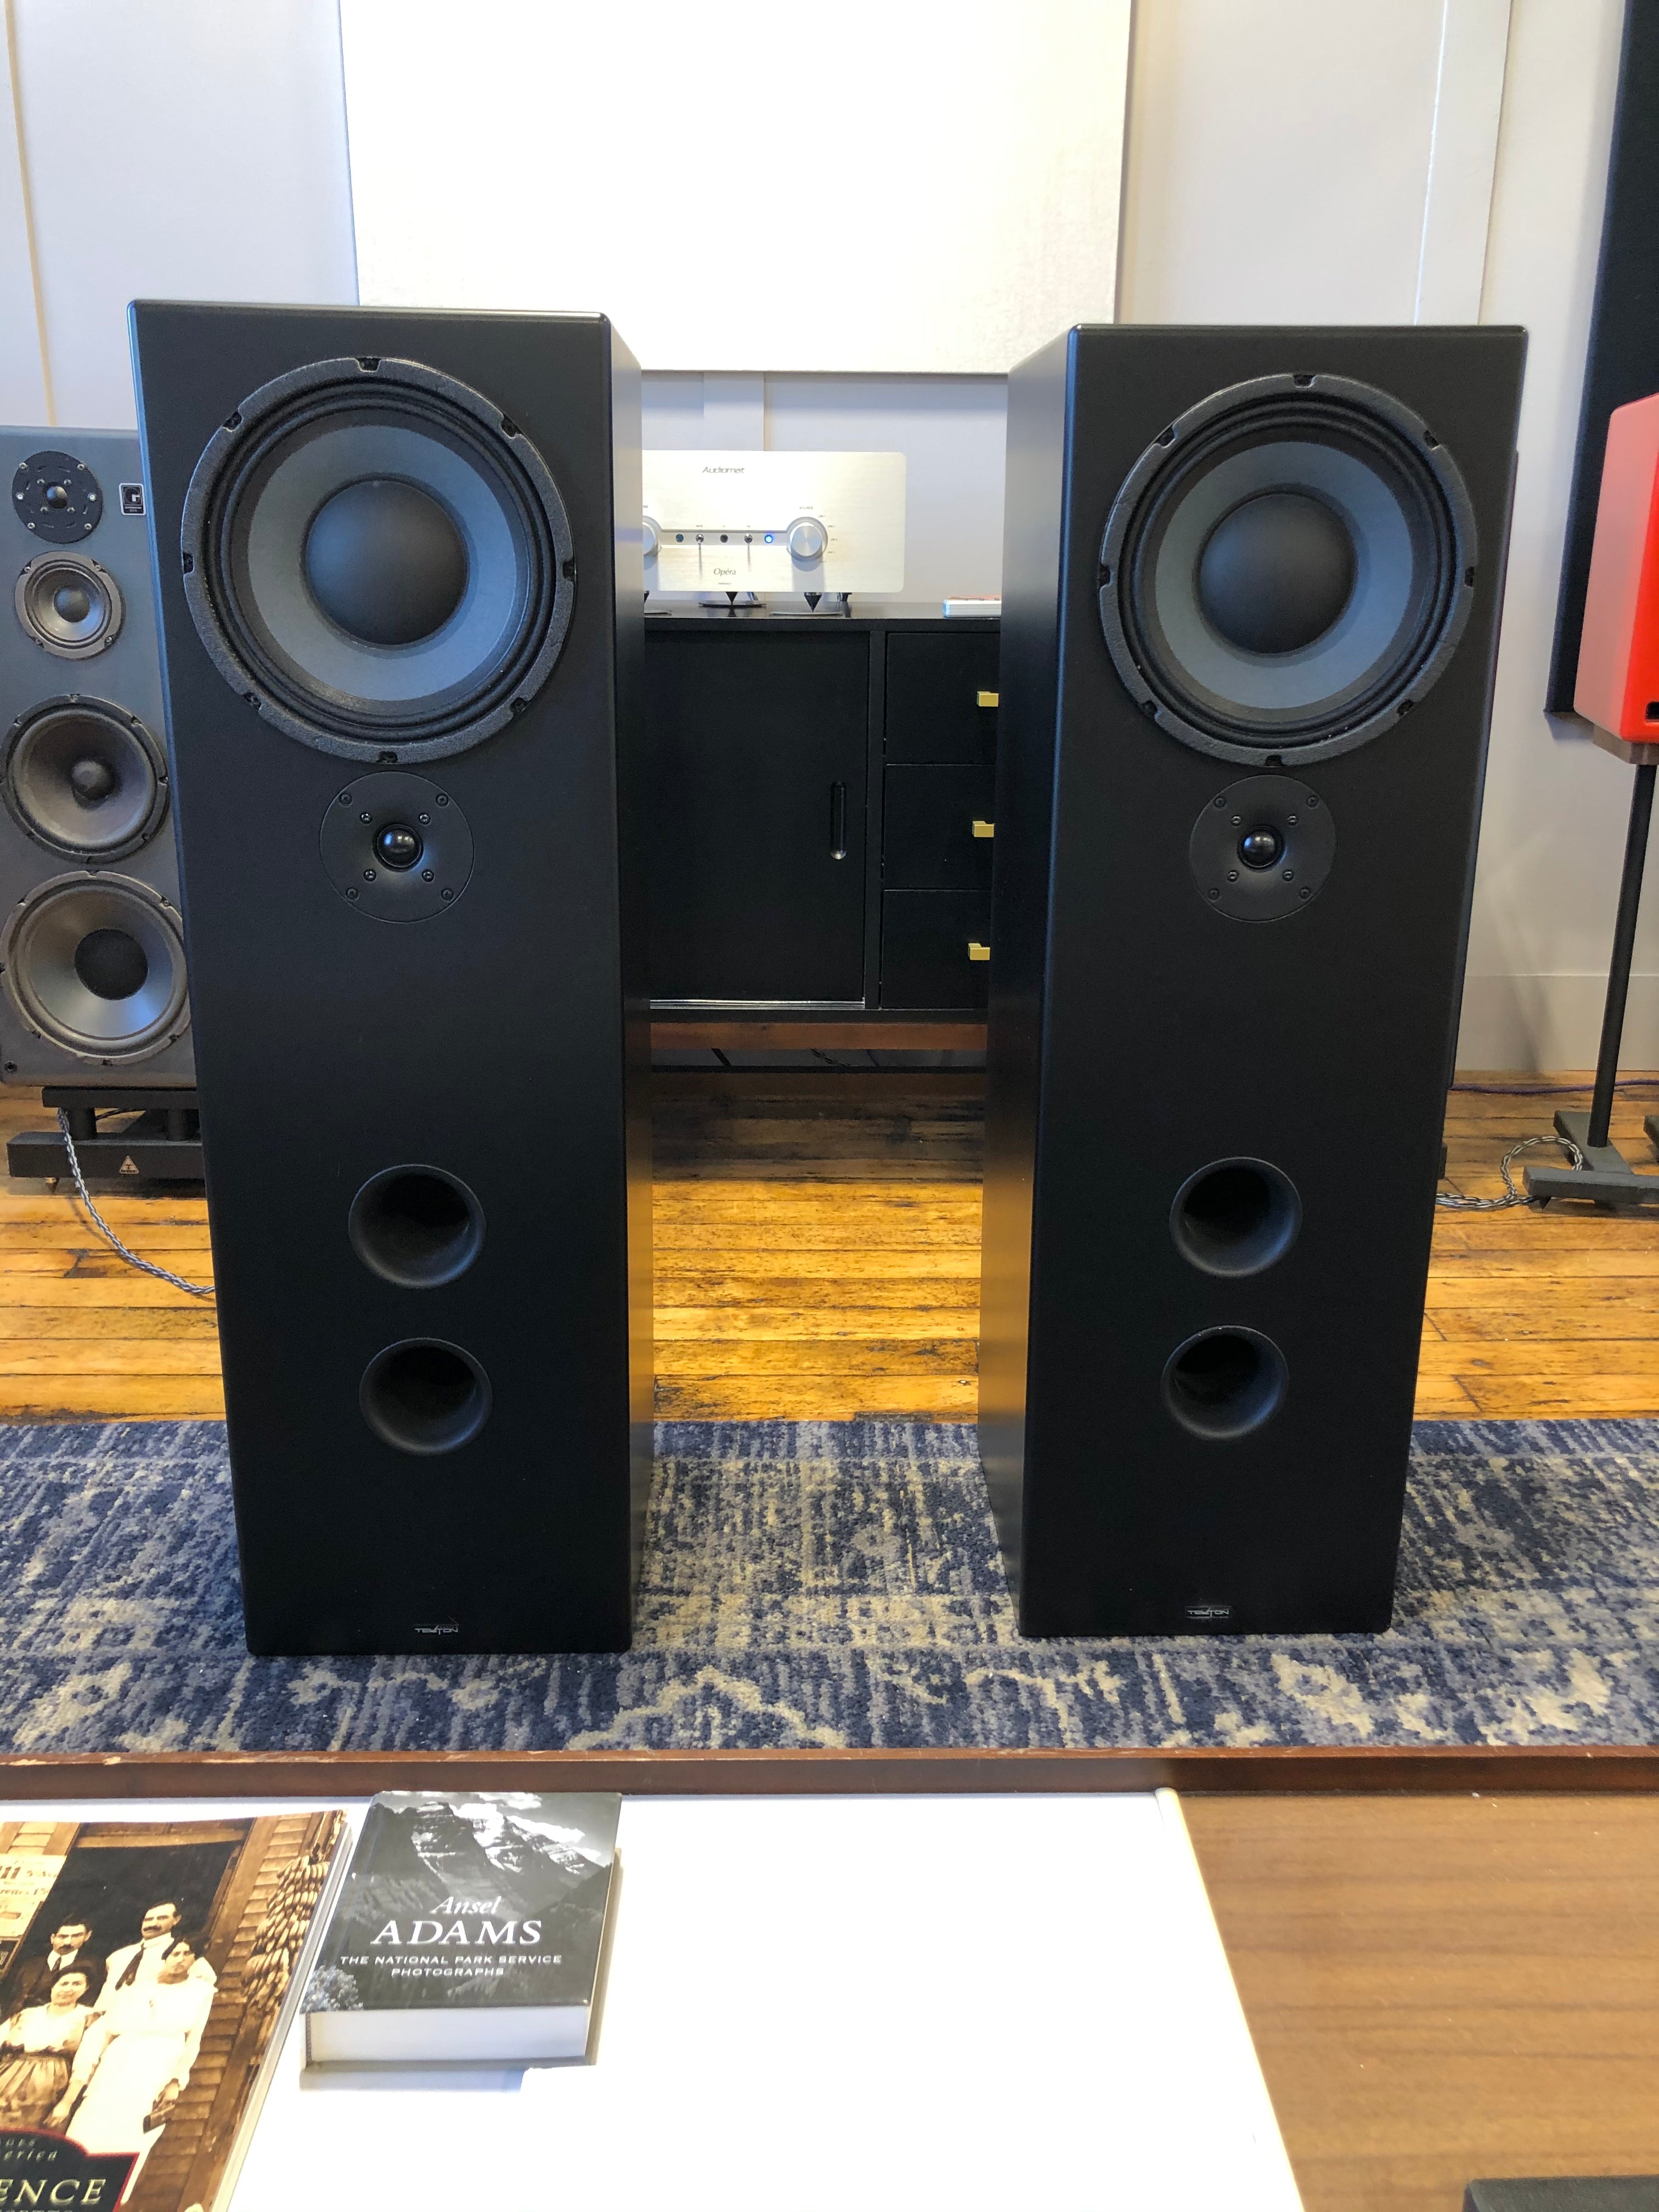 tekton speakers lore oriel